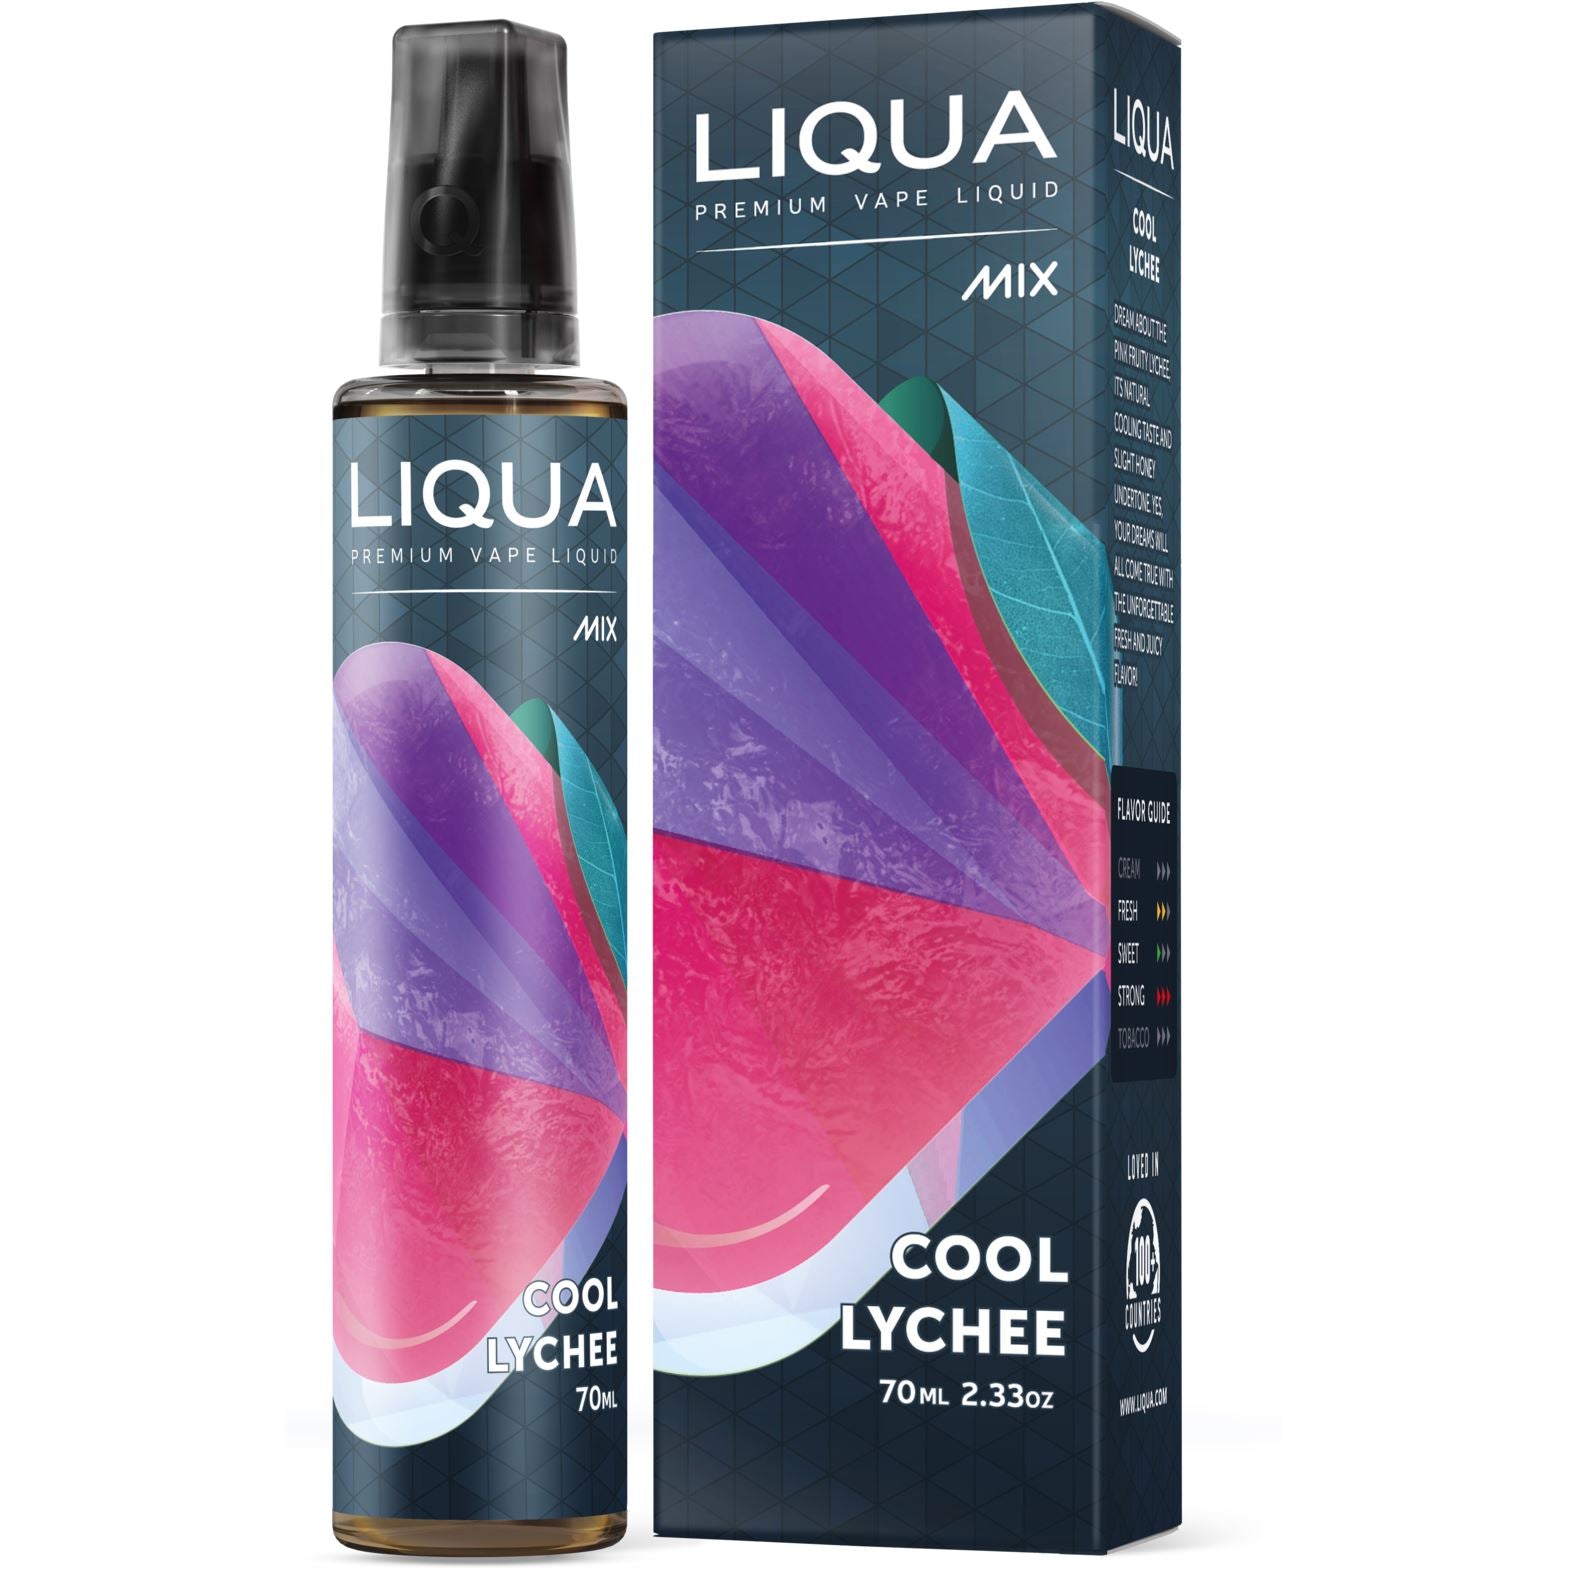 Liqua Mix - Cool Lychee 70ml - Vapoureyes